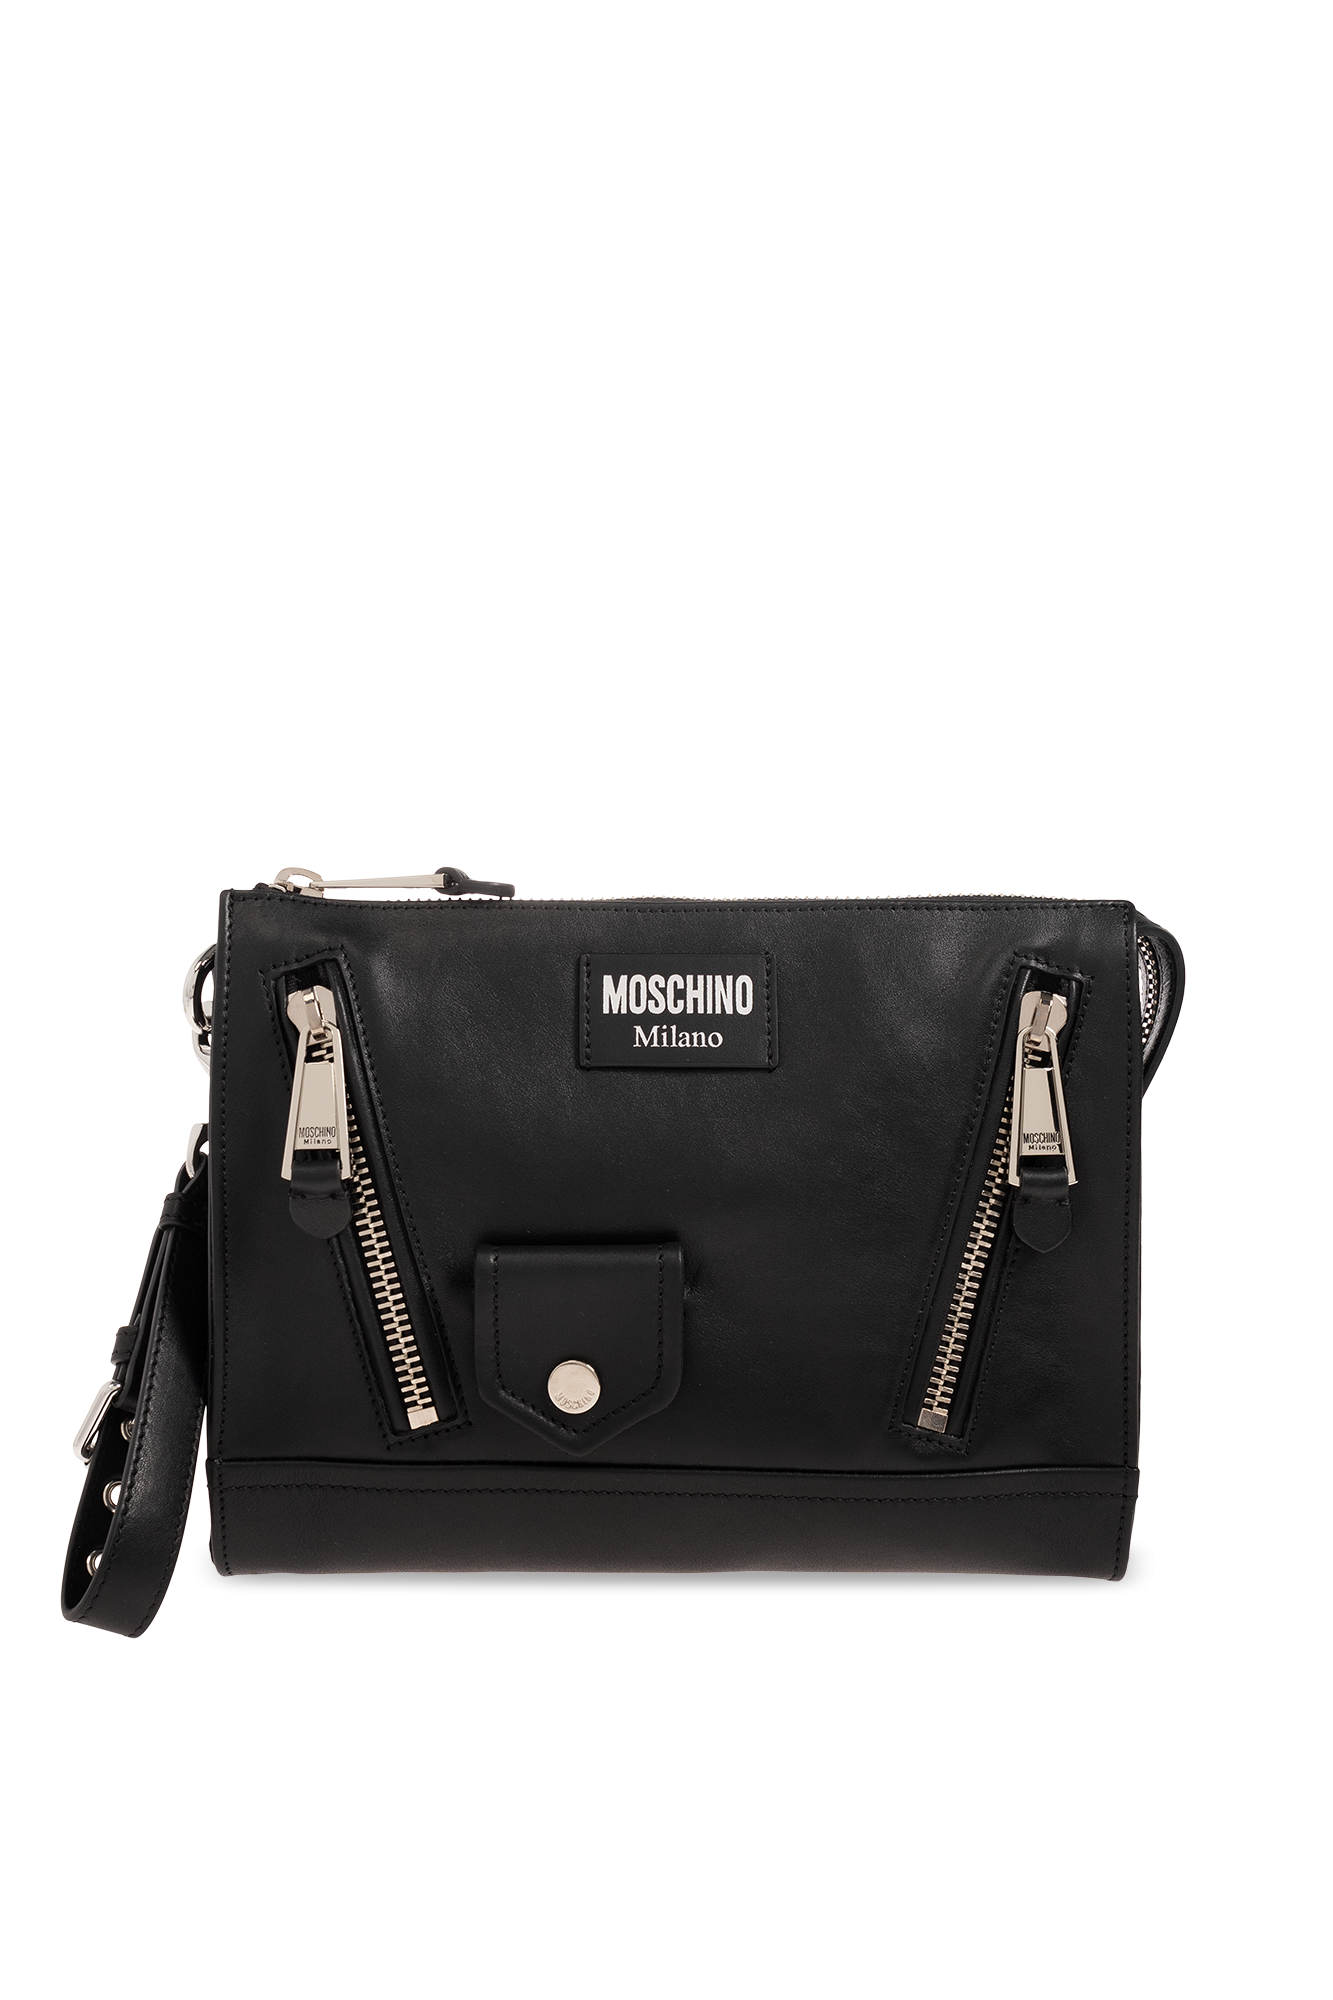 Black Handbag with logo Moschino - Vitkac Italy